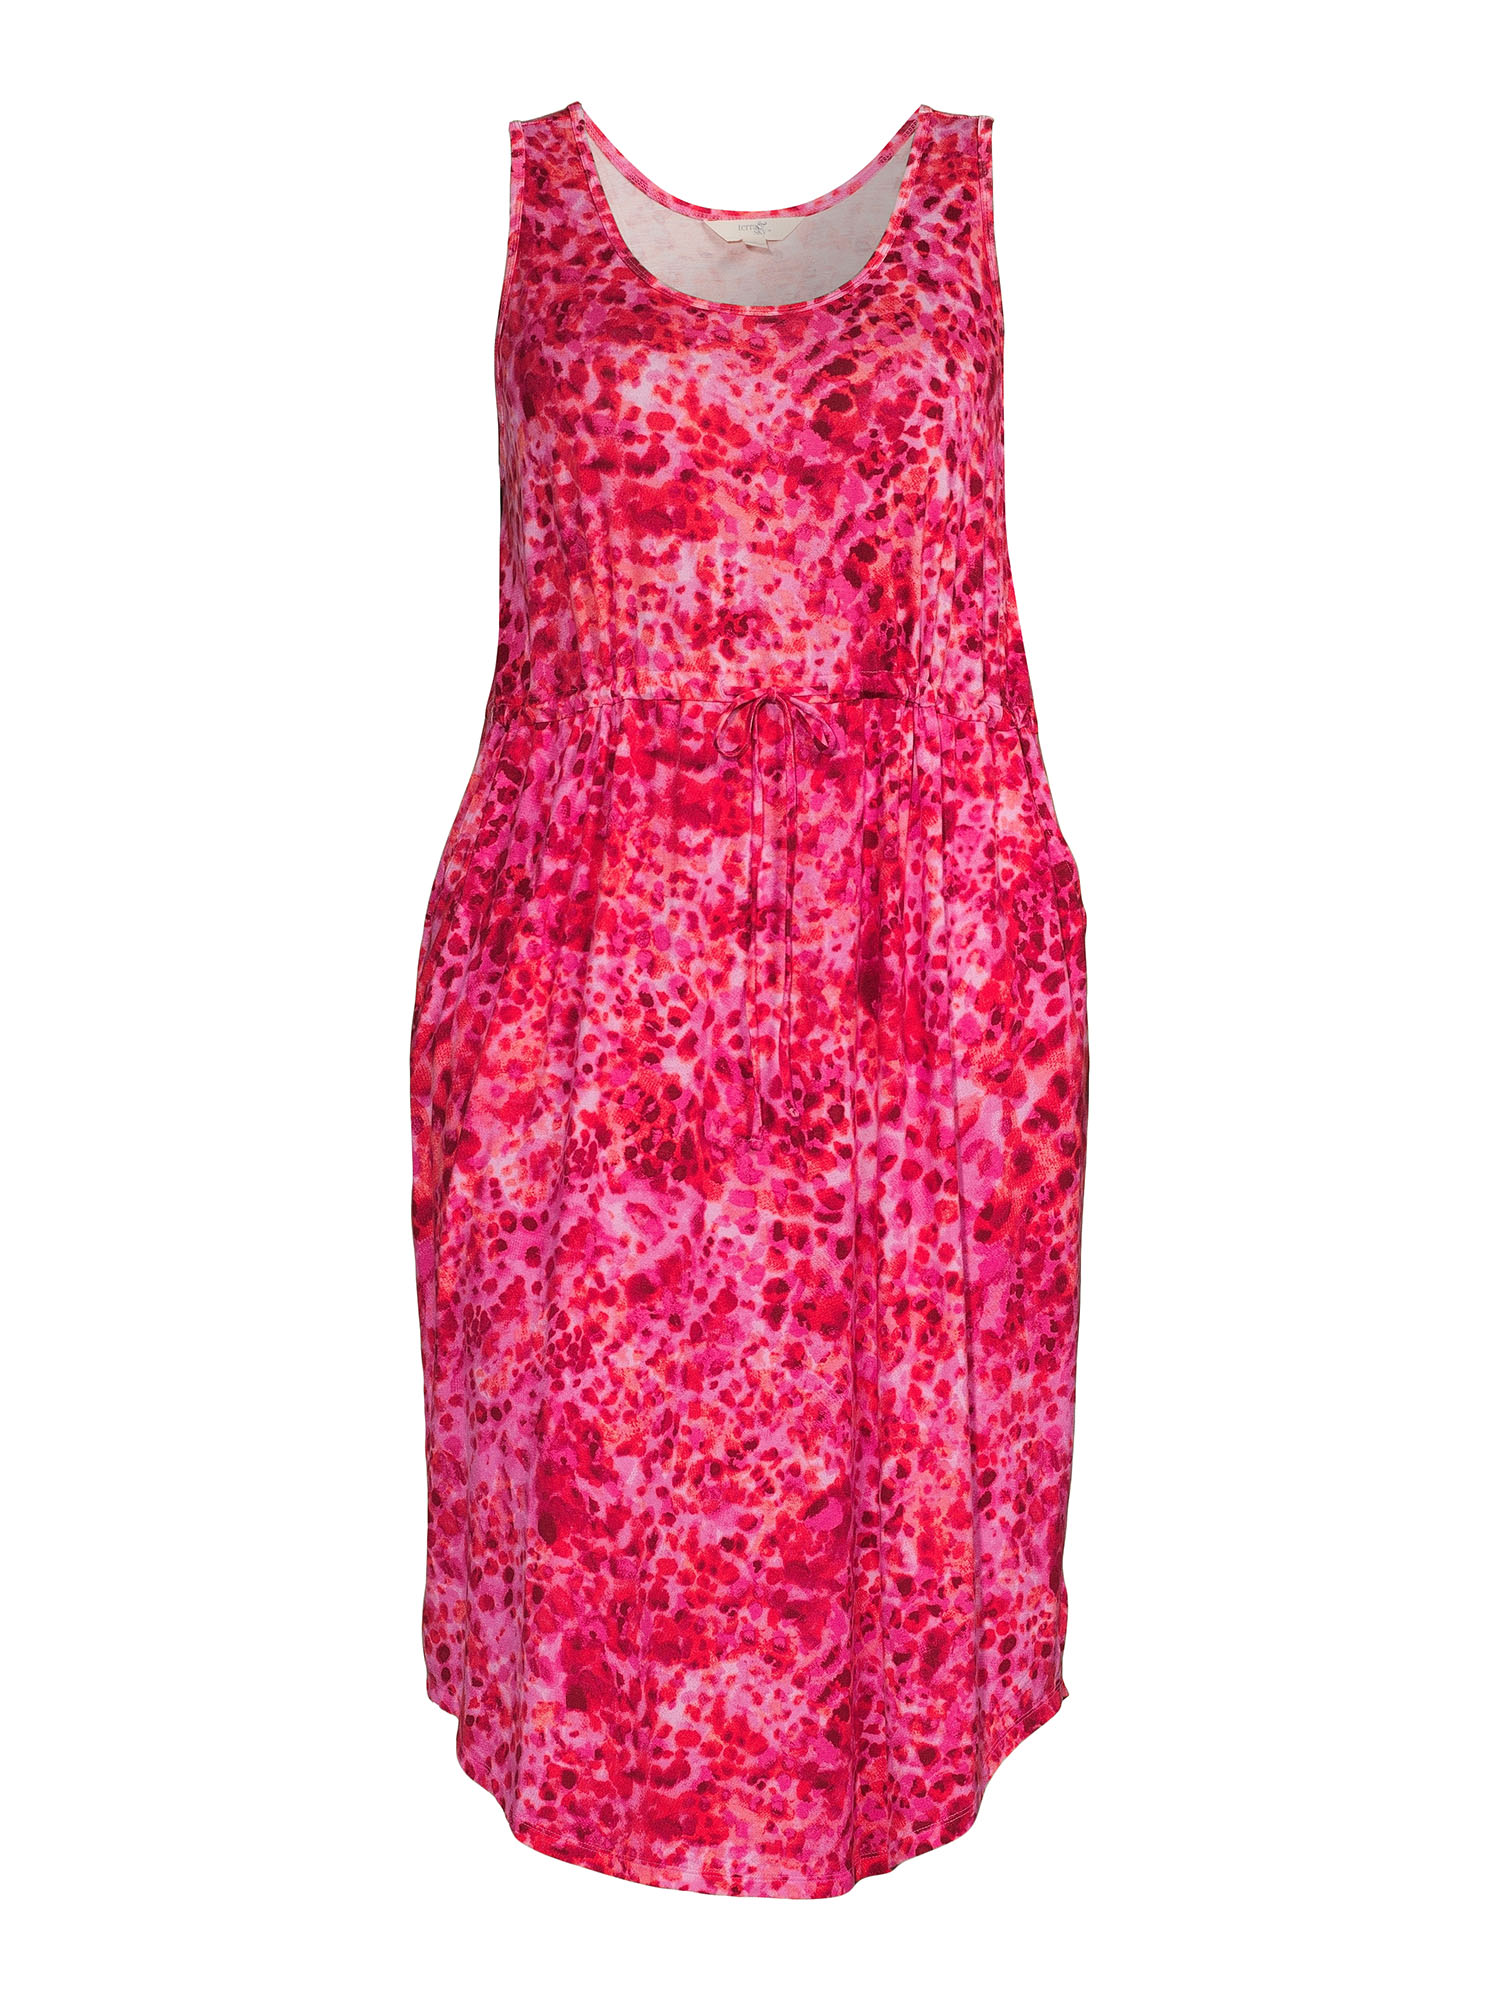 Terra & Sky Women's Plus Size Drawstring Waist Tank Dress - image 5 of 5